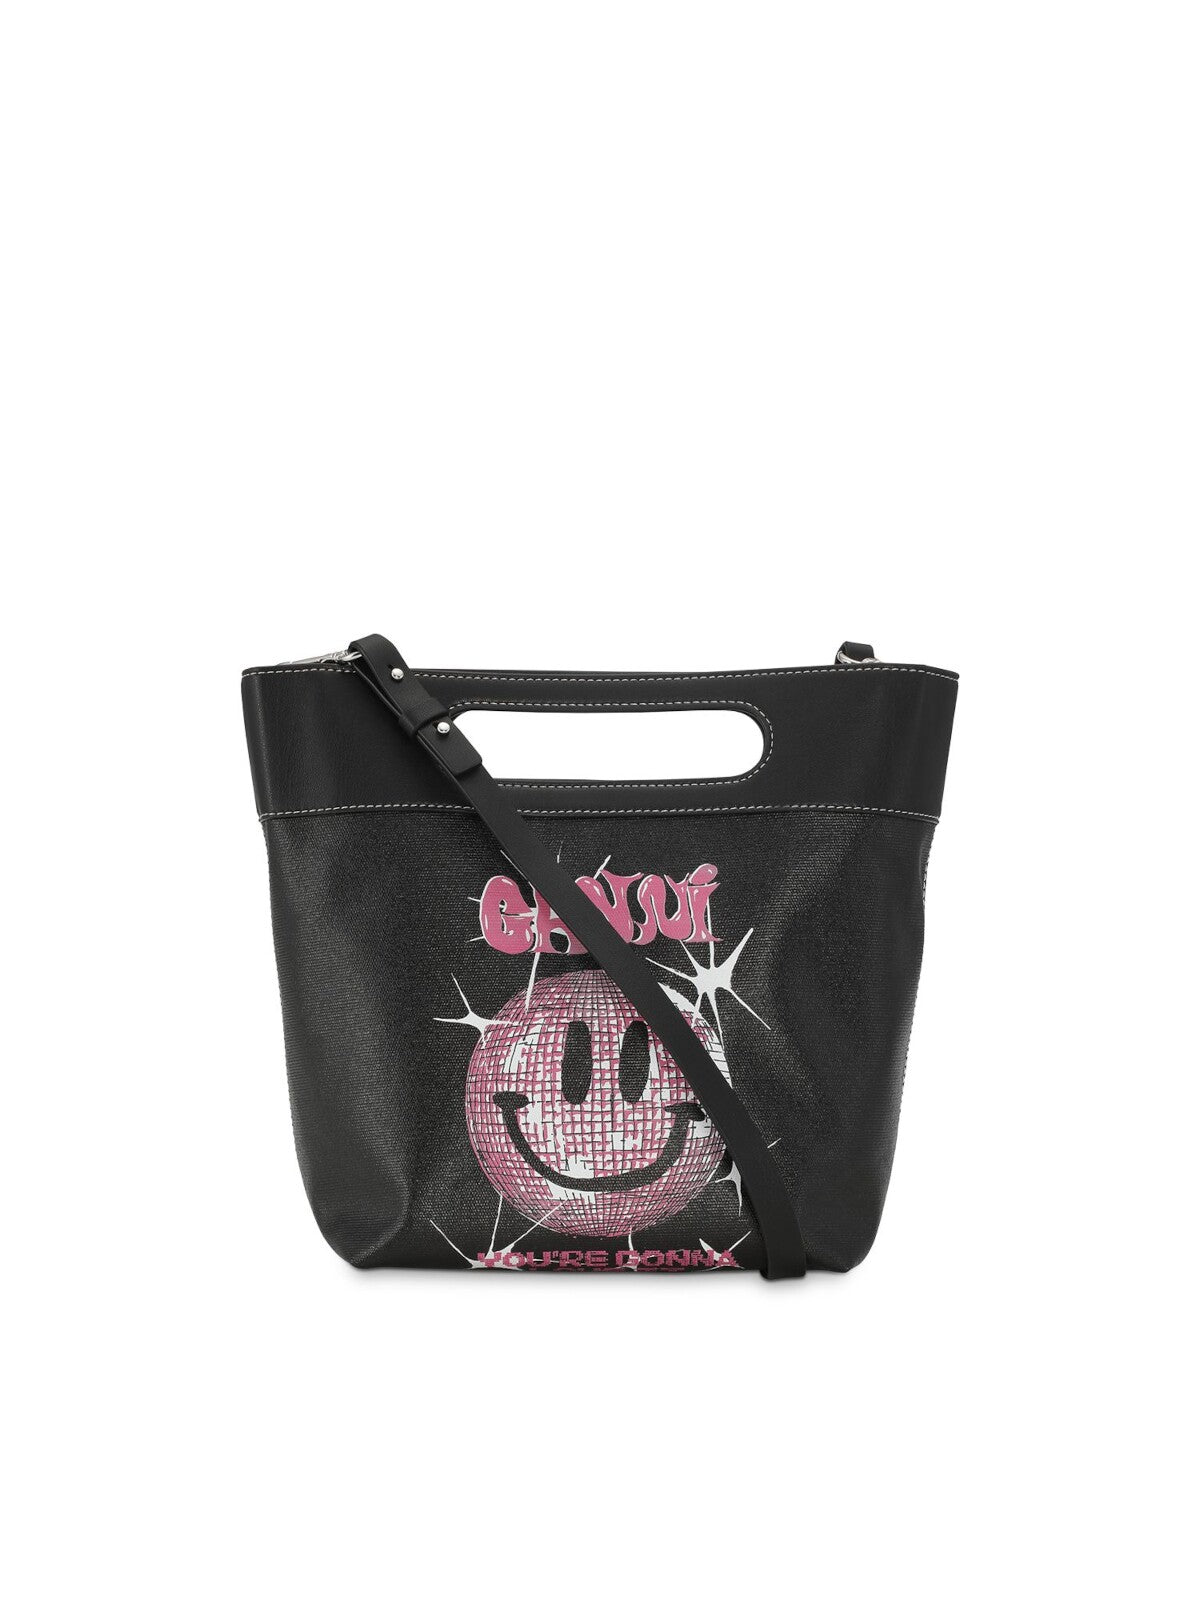 GANNI Women's Black Double Handle Solid Leather Trim Logo Graphic Adjustable Strap Tote Handbag Purse